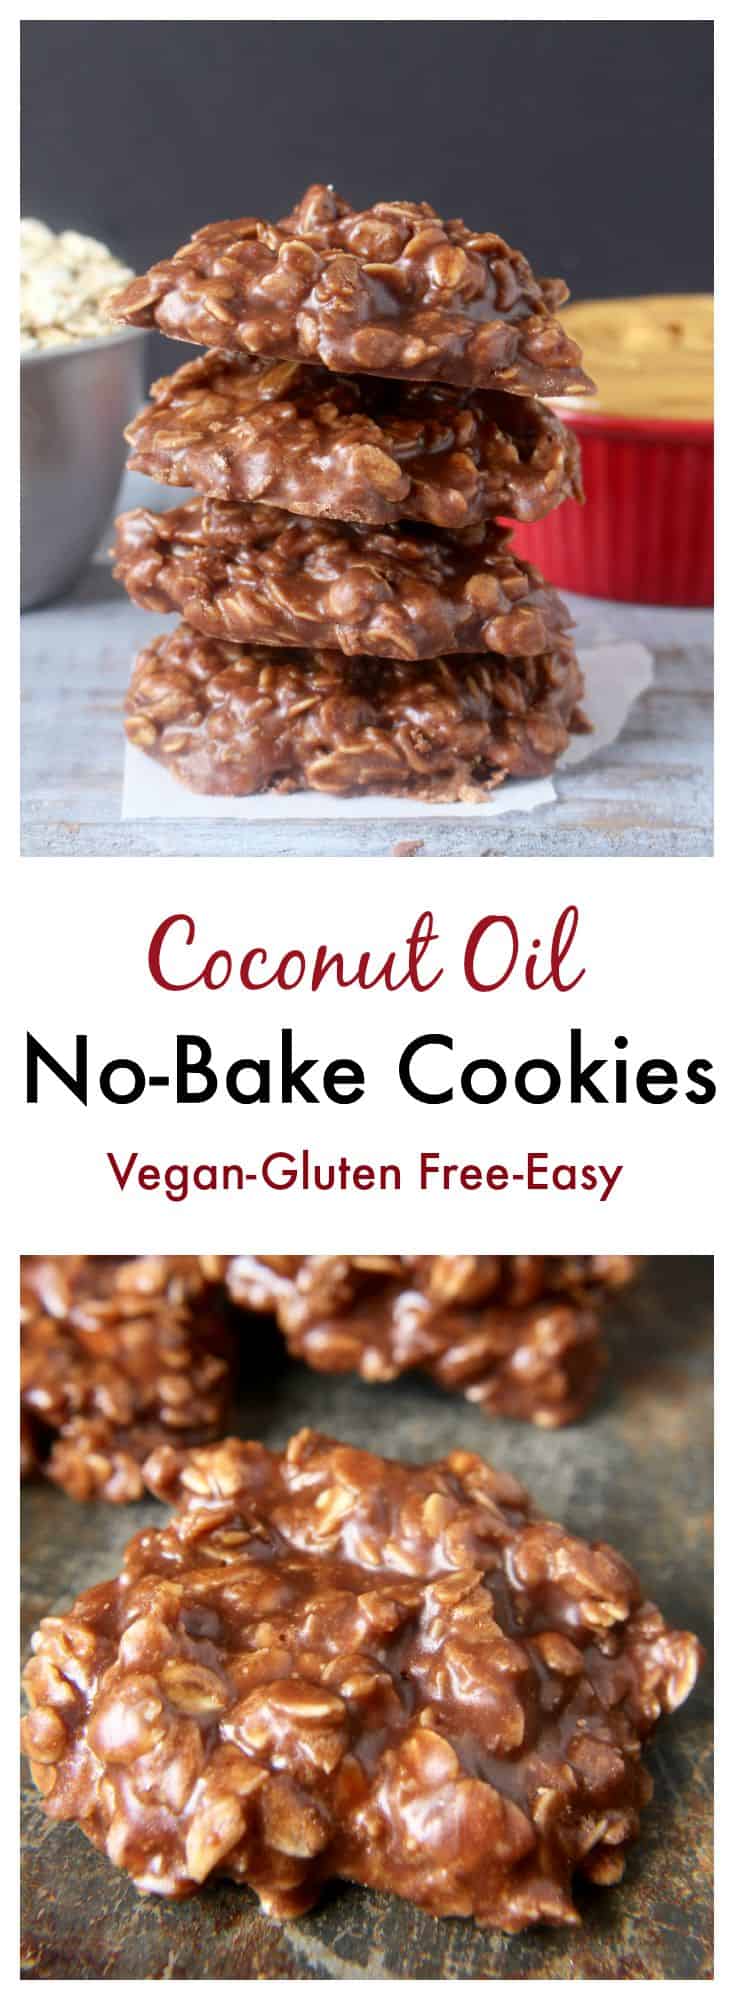 Coconut Oil No-Bake Cookies